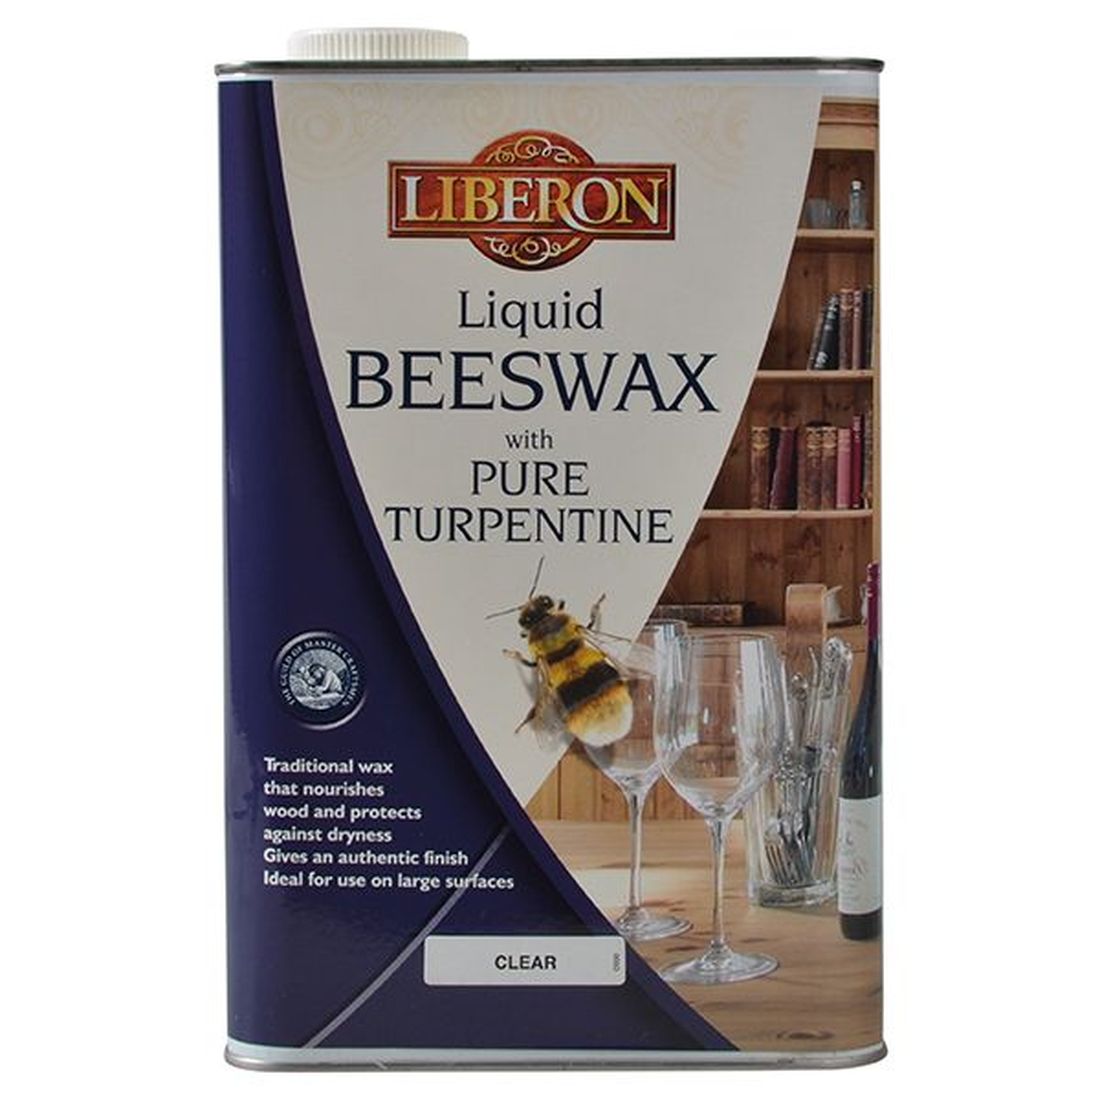 Liberon Beeswax Liquid Clear 5 litre      